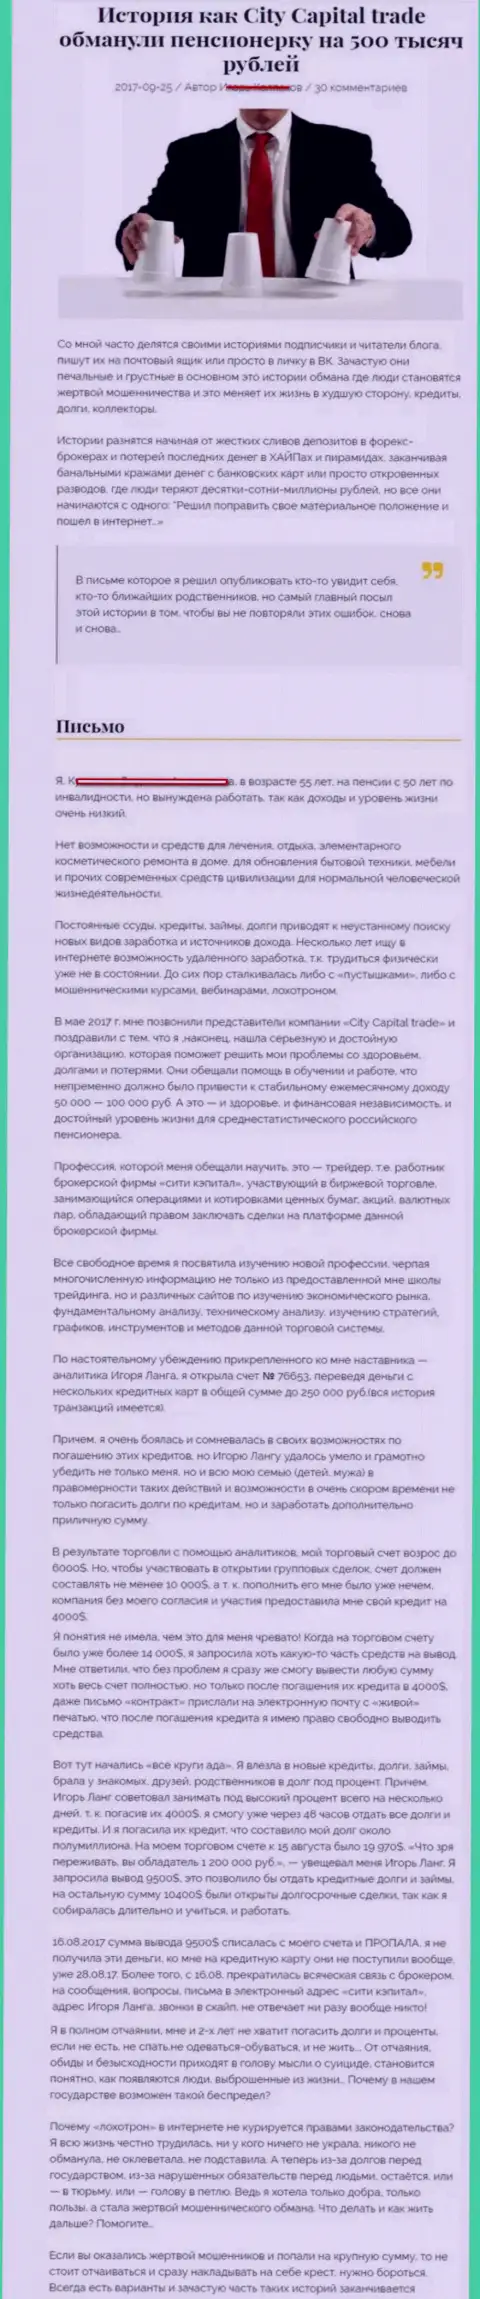 СитиКапитал Трейд надули клиентку пенсионного возраста - инвалида на 500 000 российских рублей - МОШЕННИКИ !!!